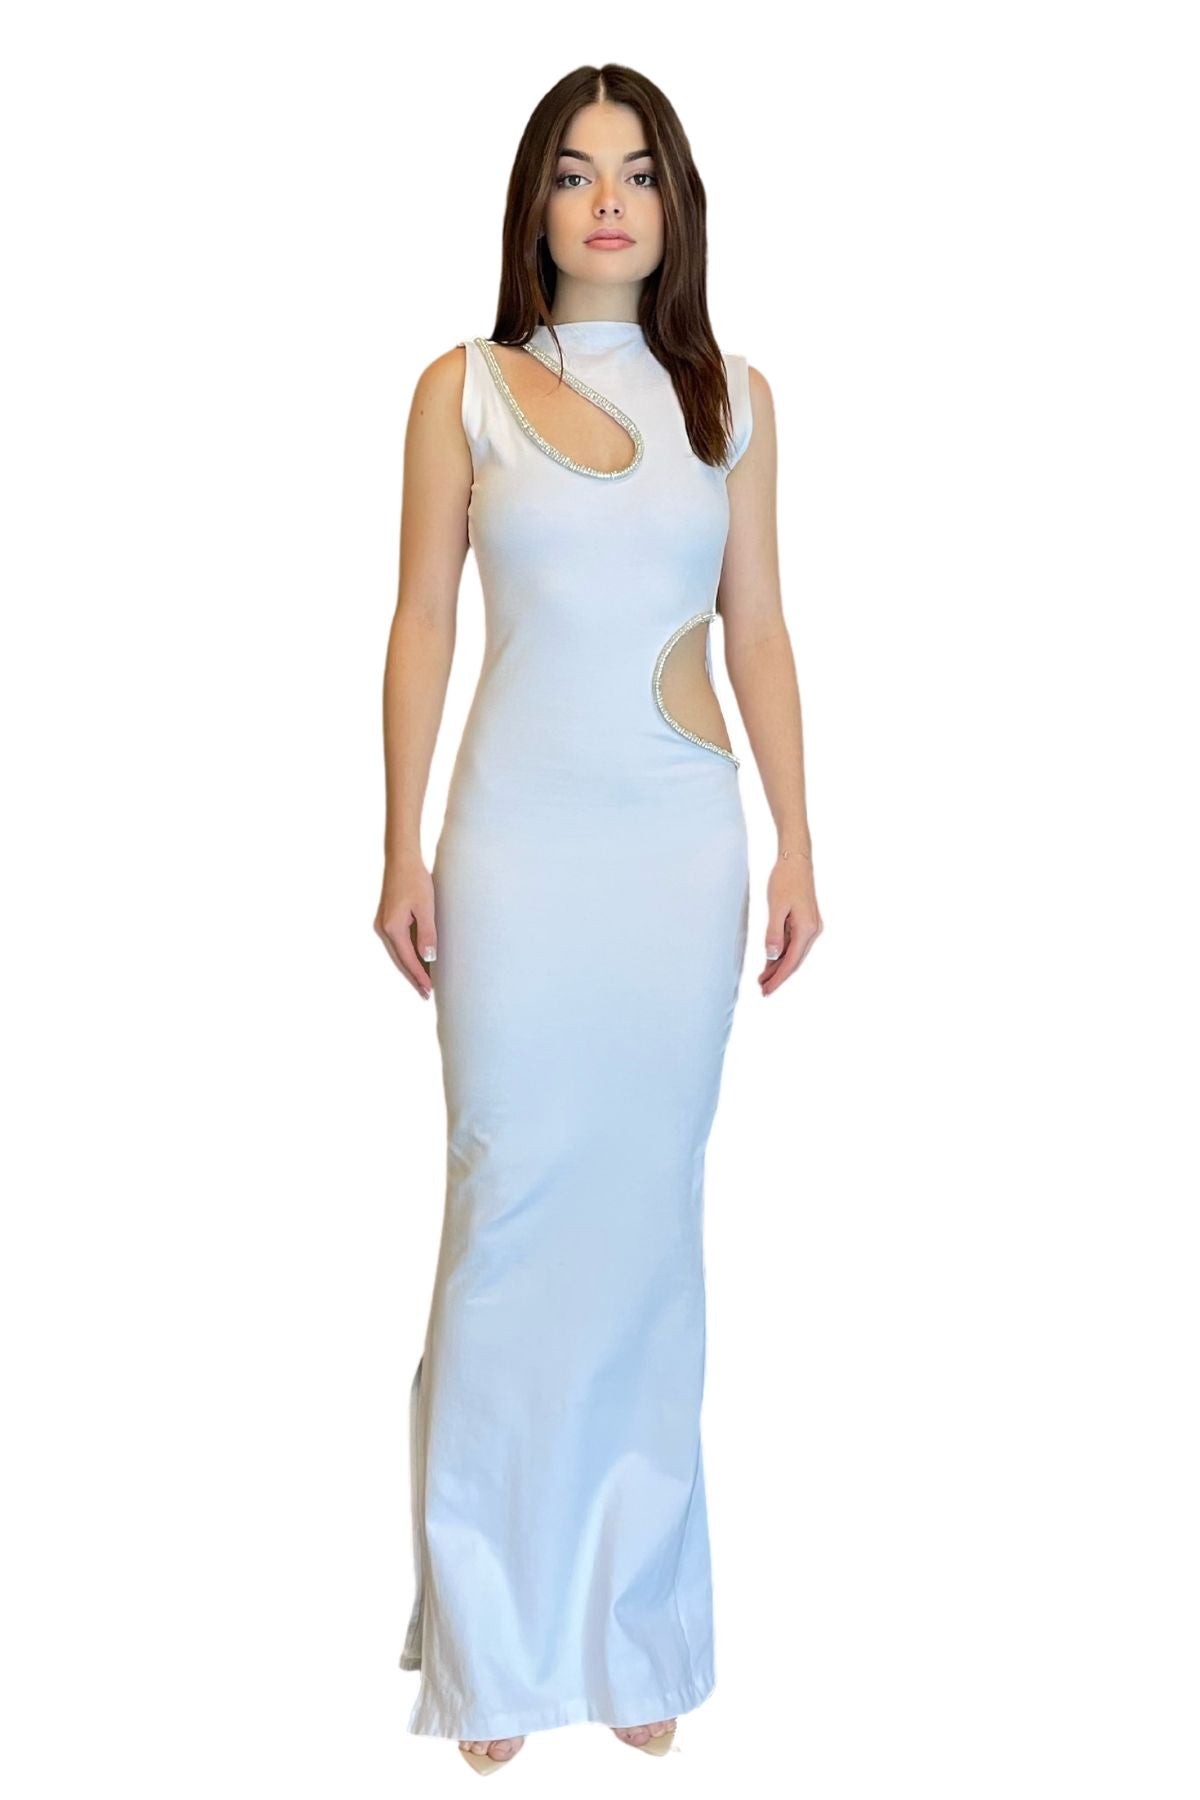 Ivona Skelo BUY IT Ivona Skelo Vivia Dress (White) - 3_d12ab803-636f-46f5-b814-6ffd460aa6ec.jpg